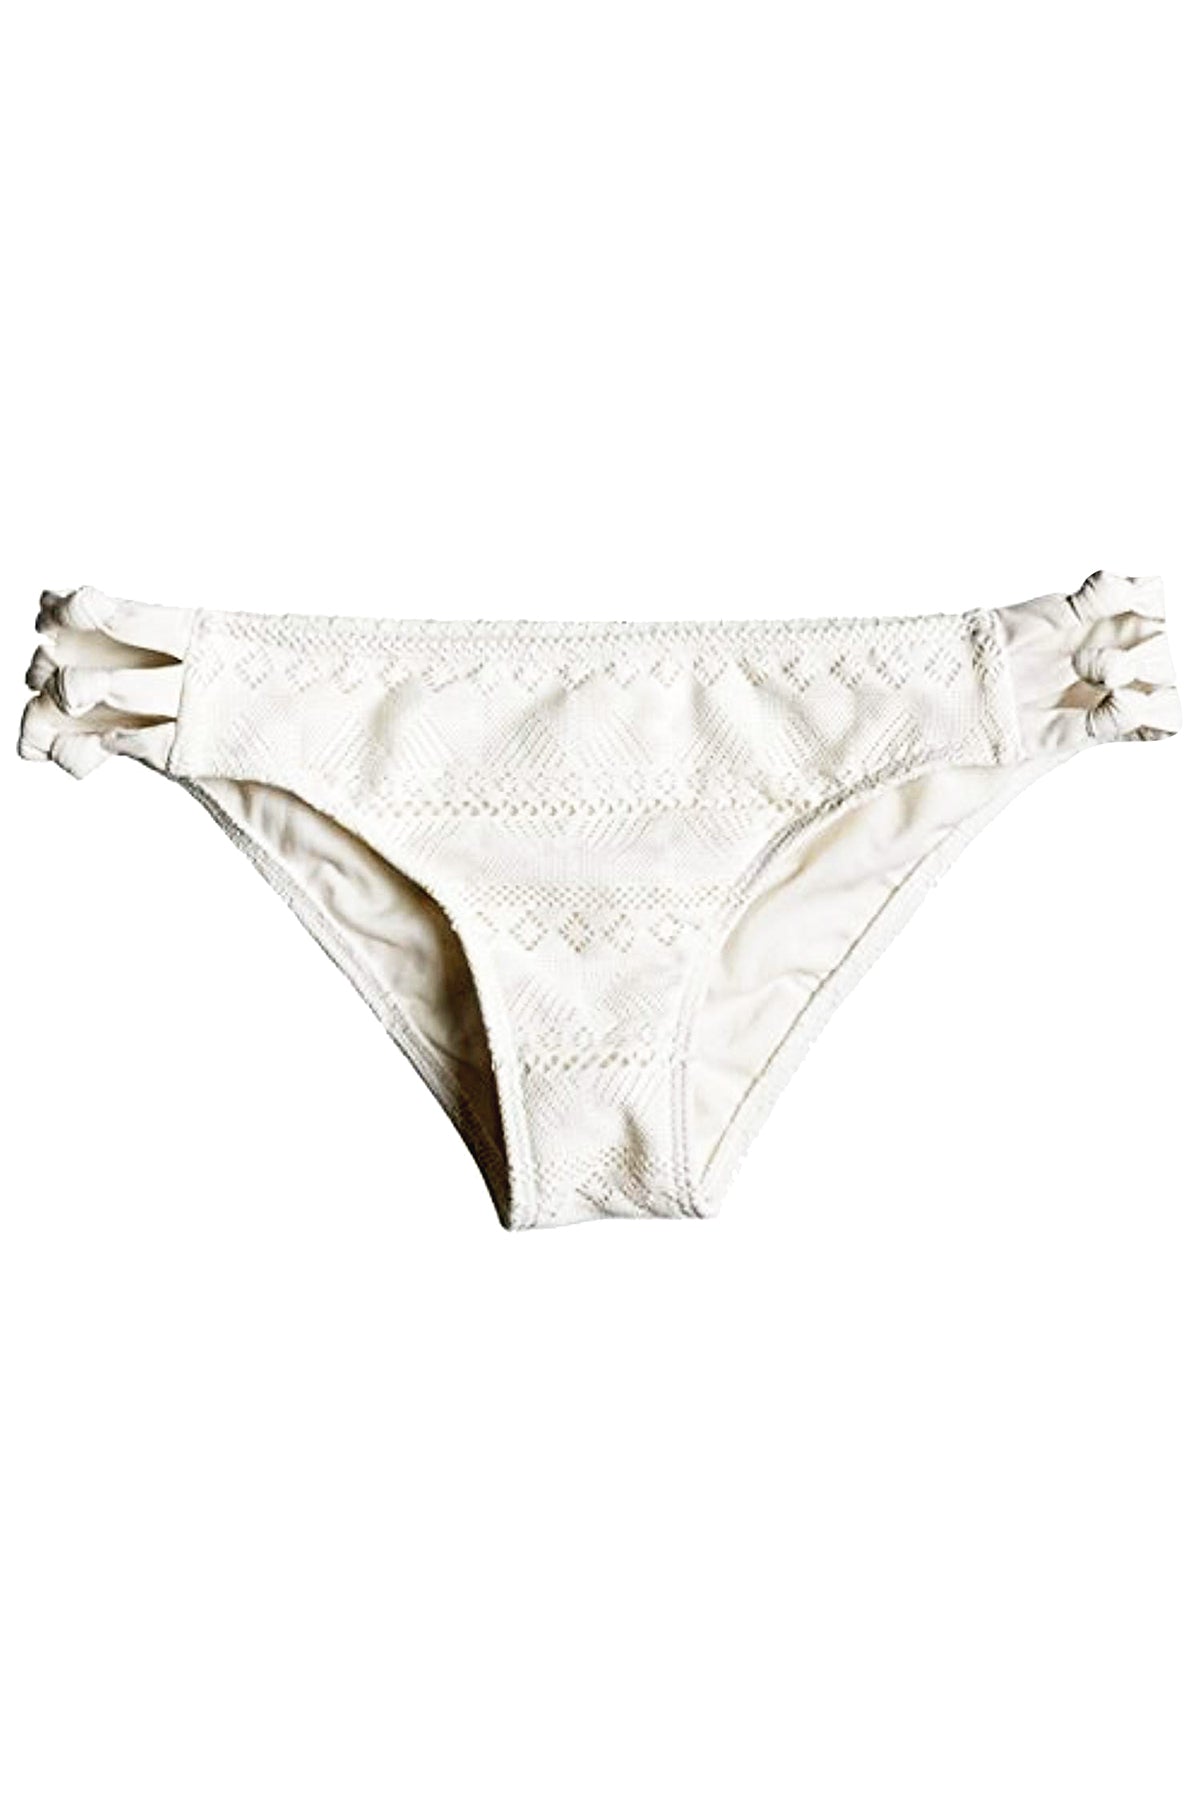 Roxy White Drop-Diamond Crochet/Knotted 70's Bikini Bottom